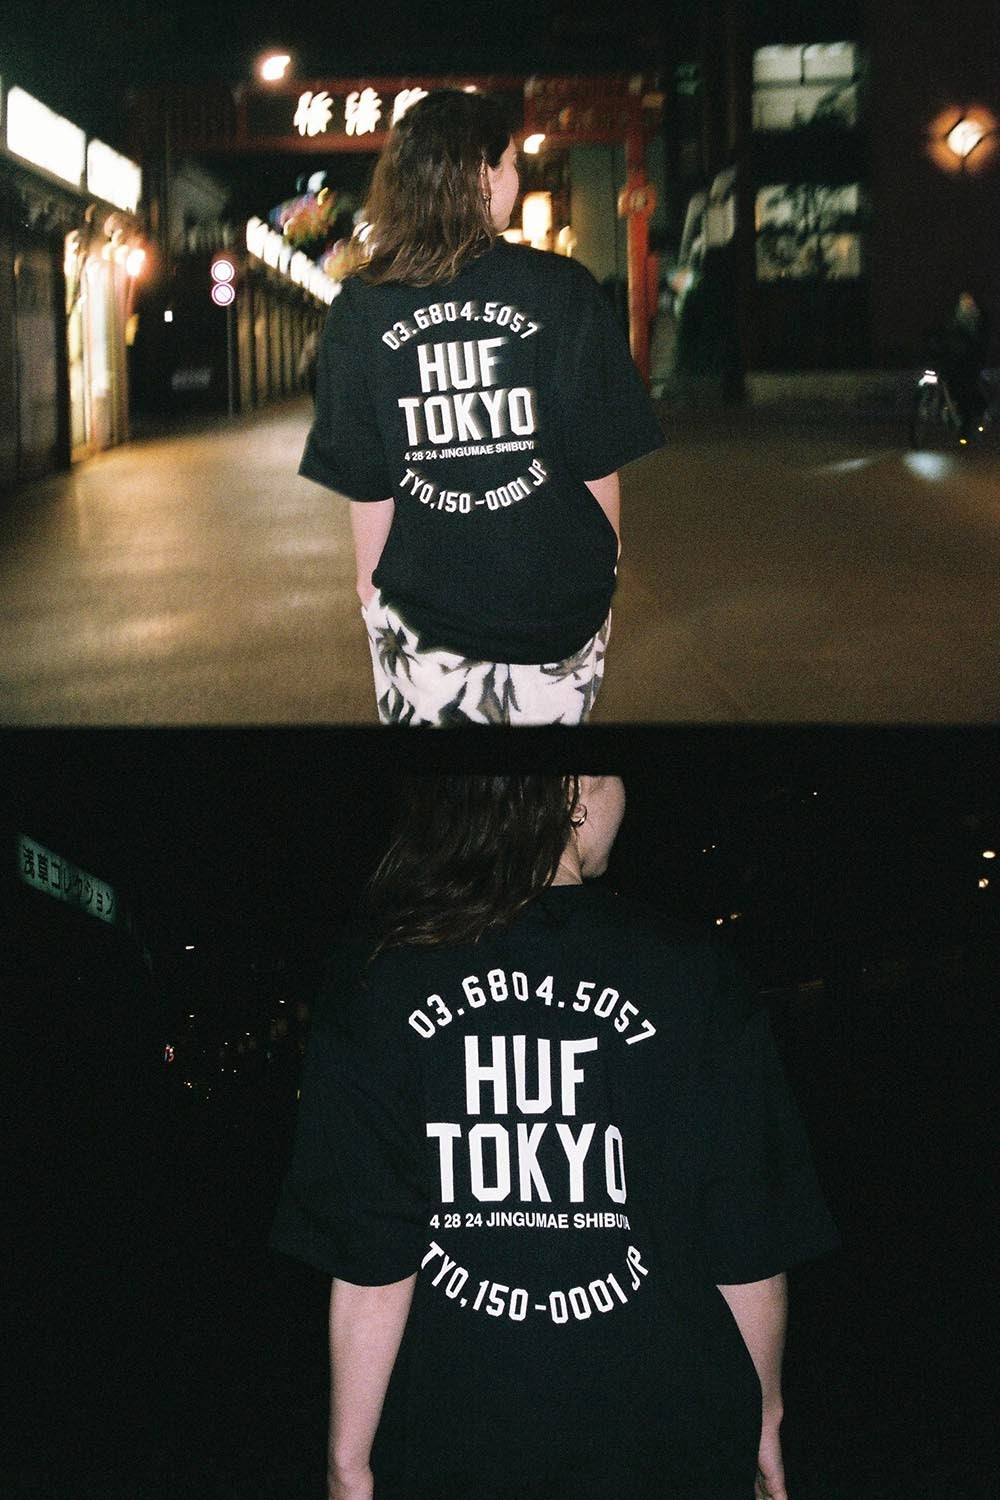 HUF CITY PACK TOKYO - HUF Worldwide JP